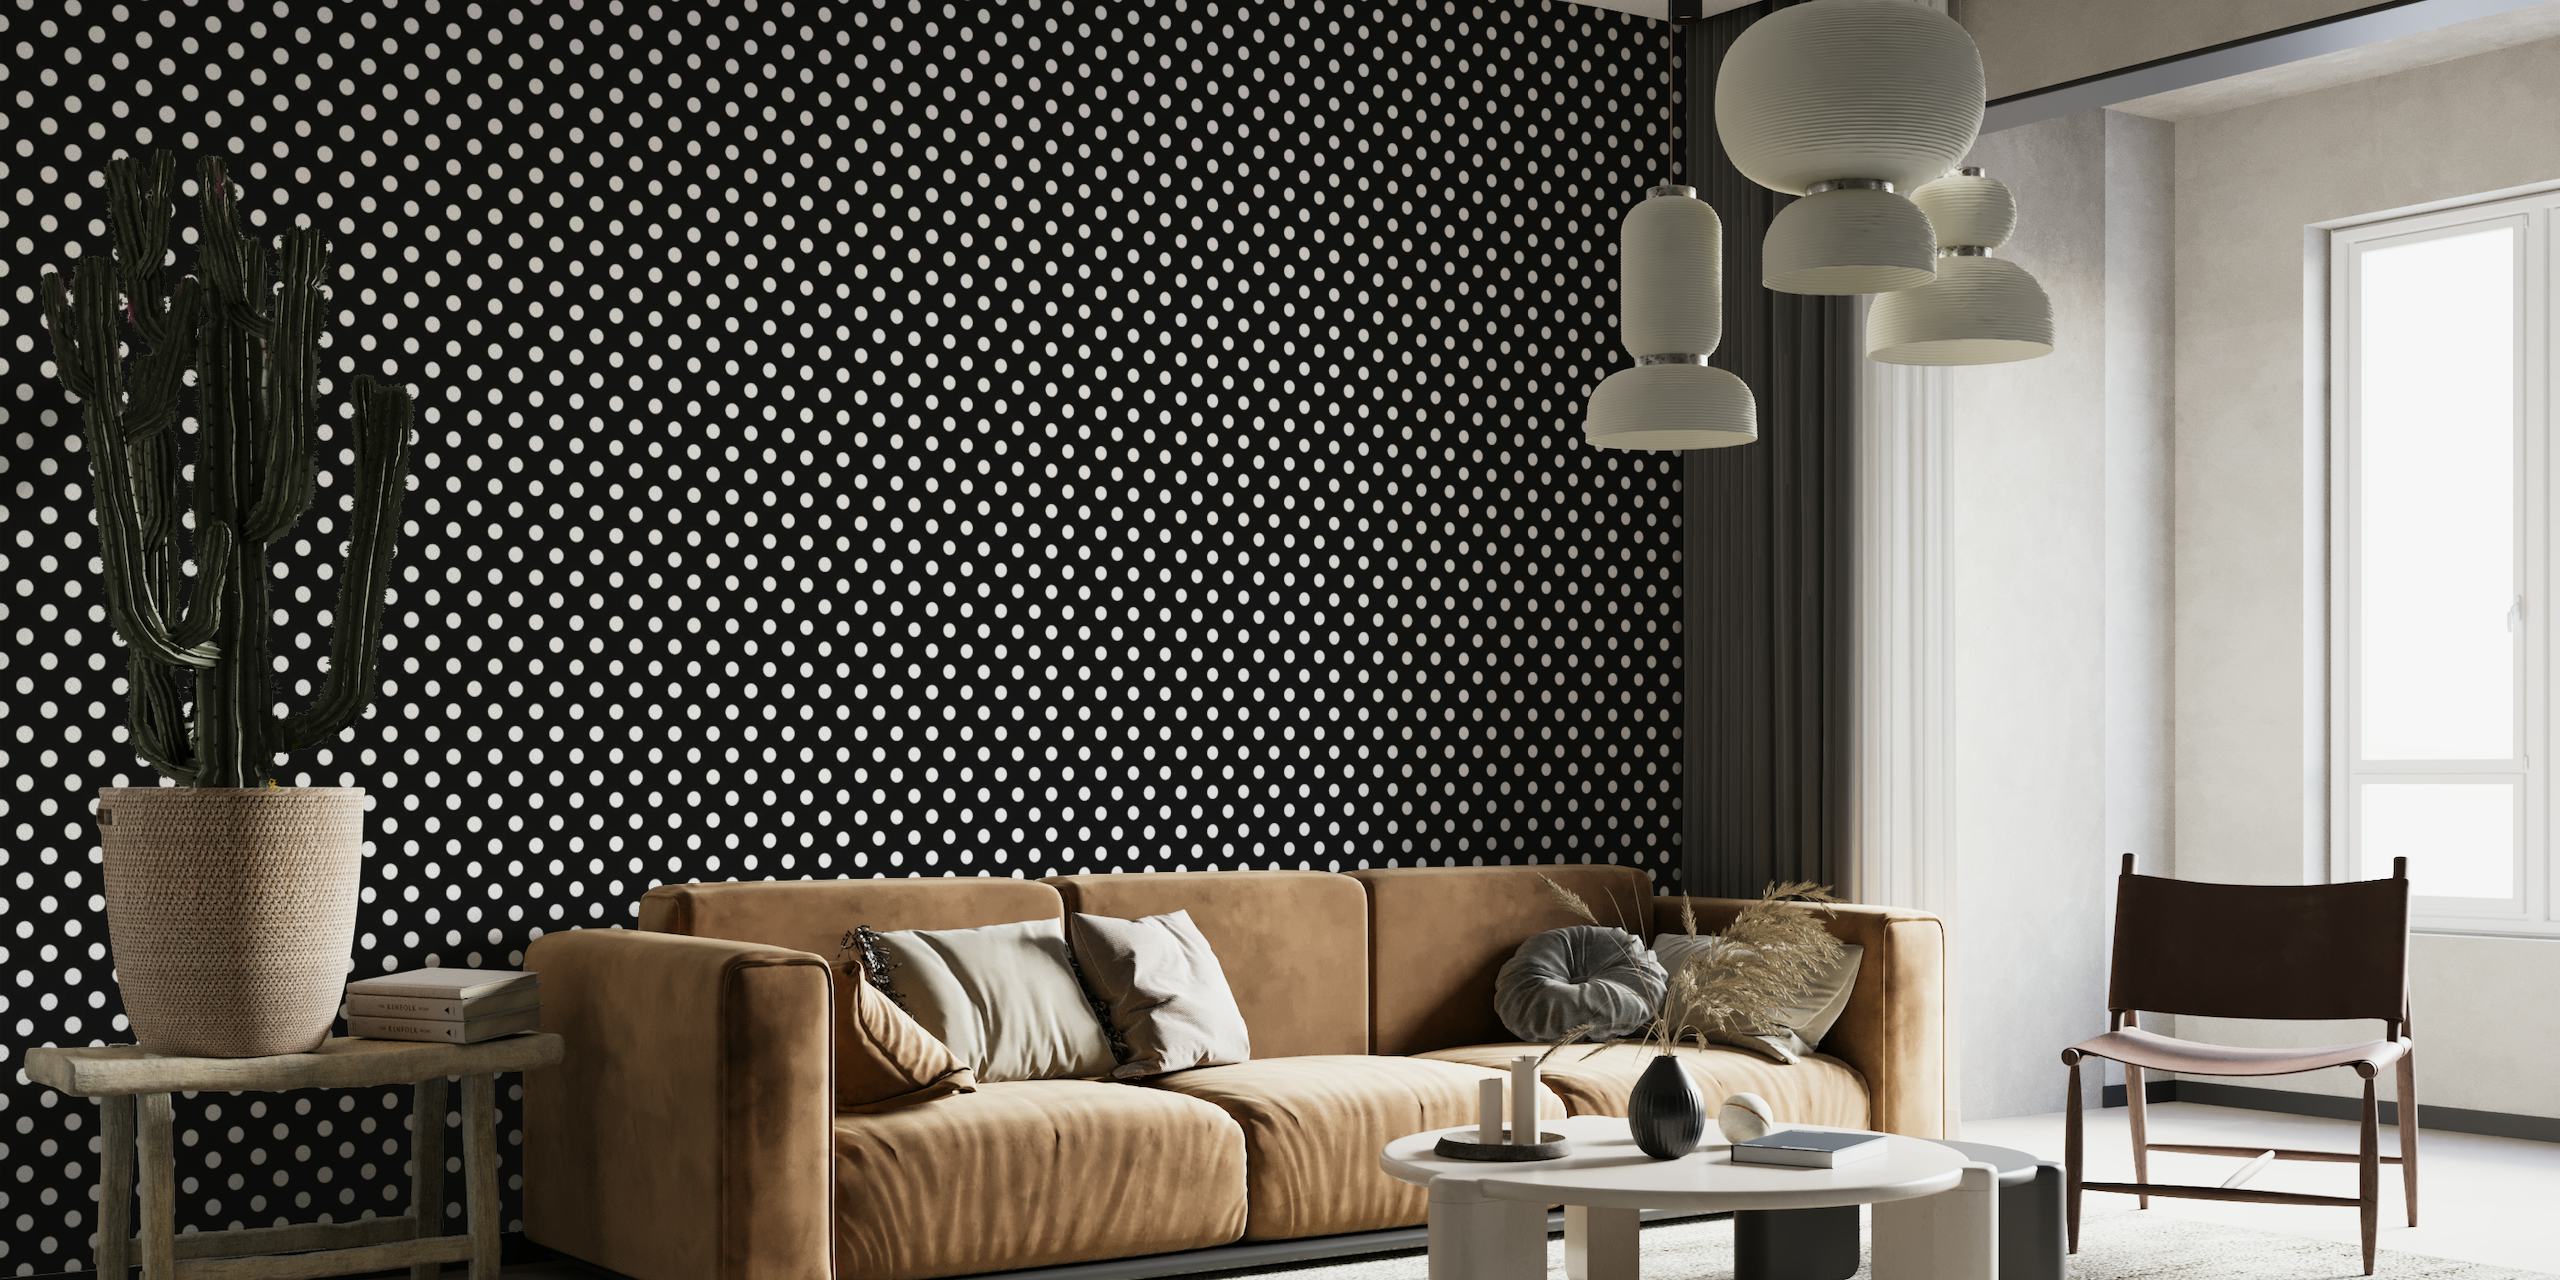 Polka Dots - White on Black wallpaper